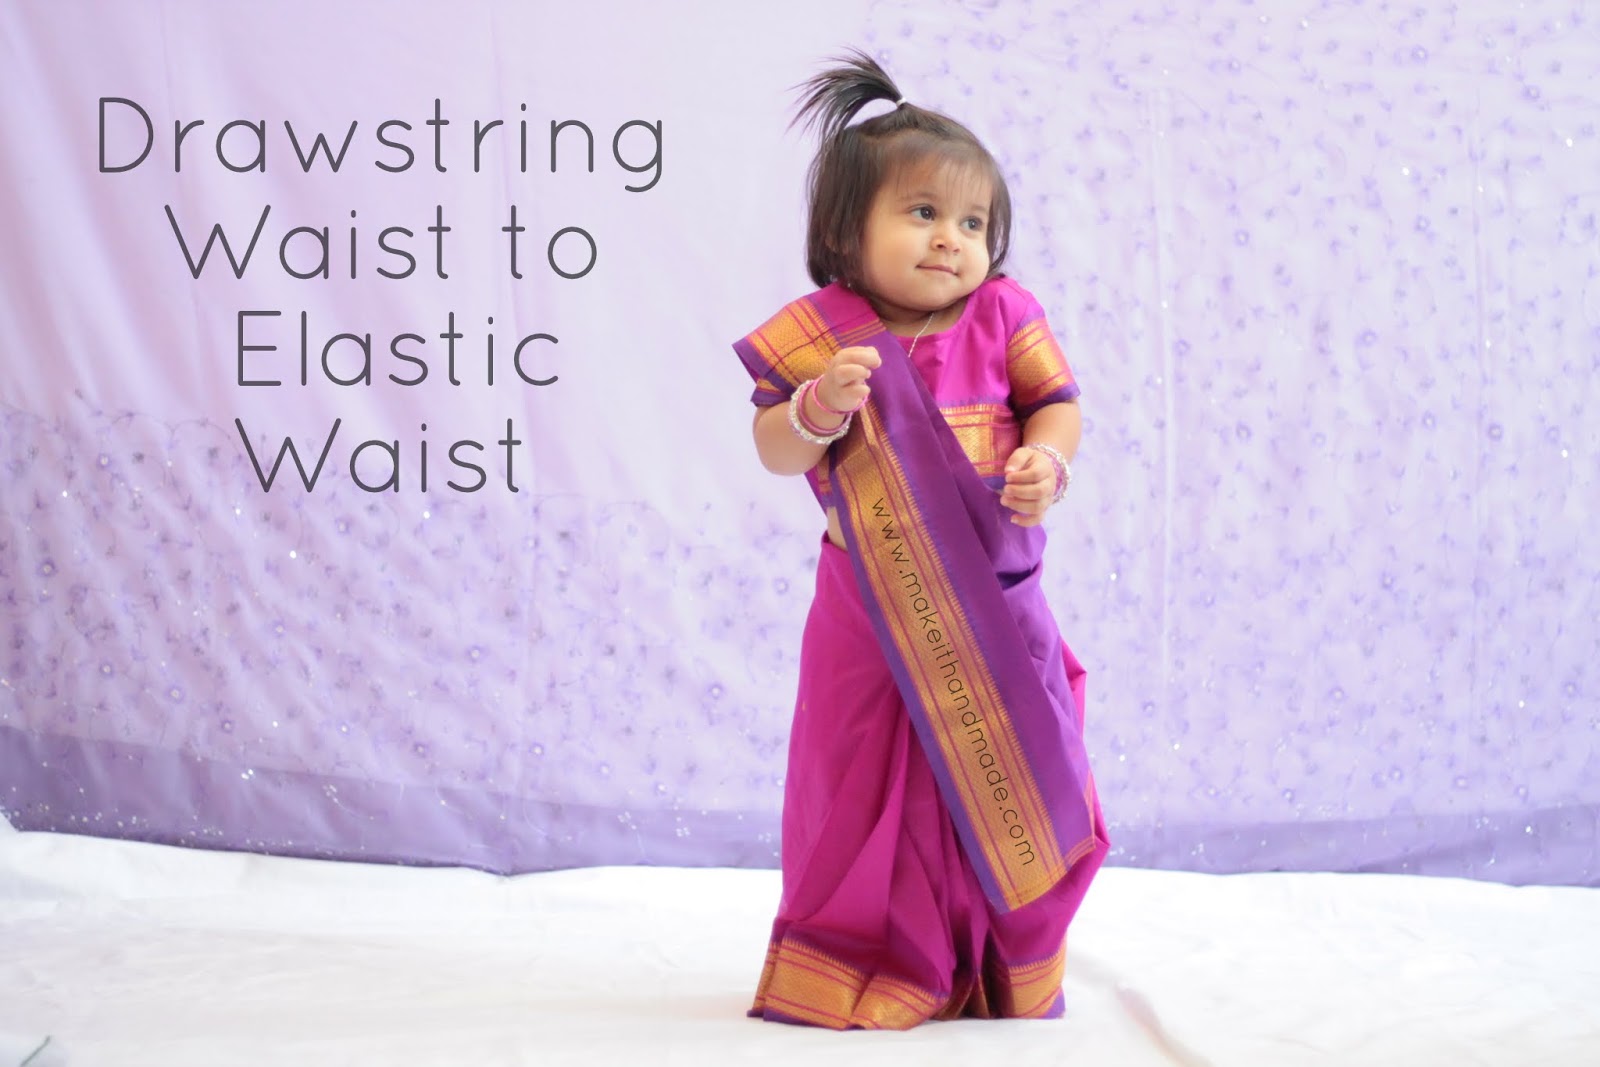 Make It Handmade: Turn a Drawstring Waist Into An Elastic Waist